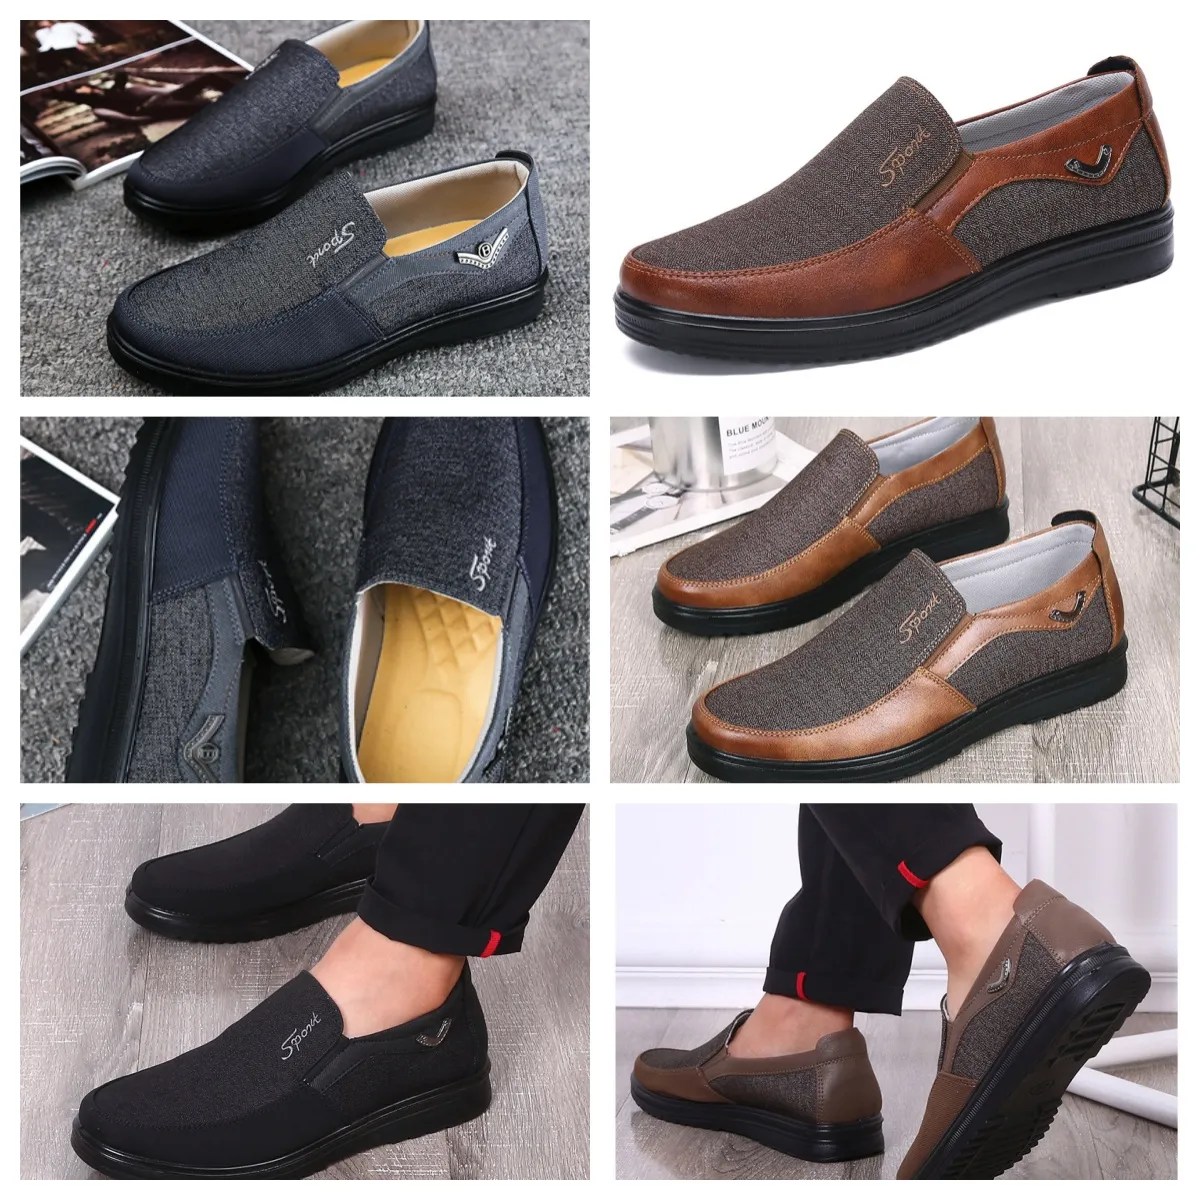 Shoes GAI sneaker sport Cloth Shoes Men Singles Business Low Tops Shoes Casual Soft Sole Slippers Flat Men Shoes Black comfort softs big sizes 38-50